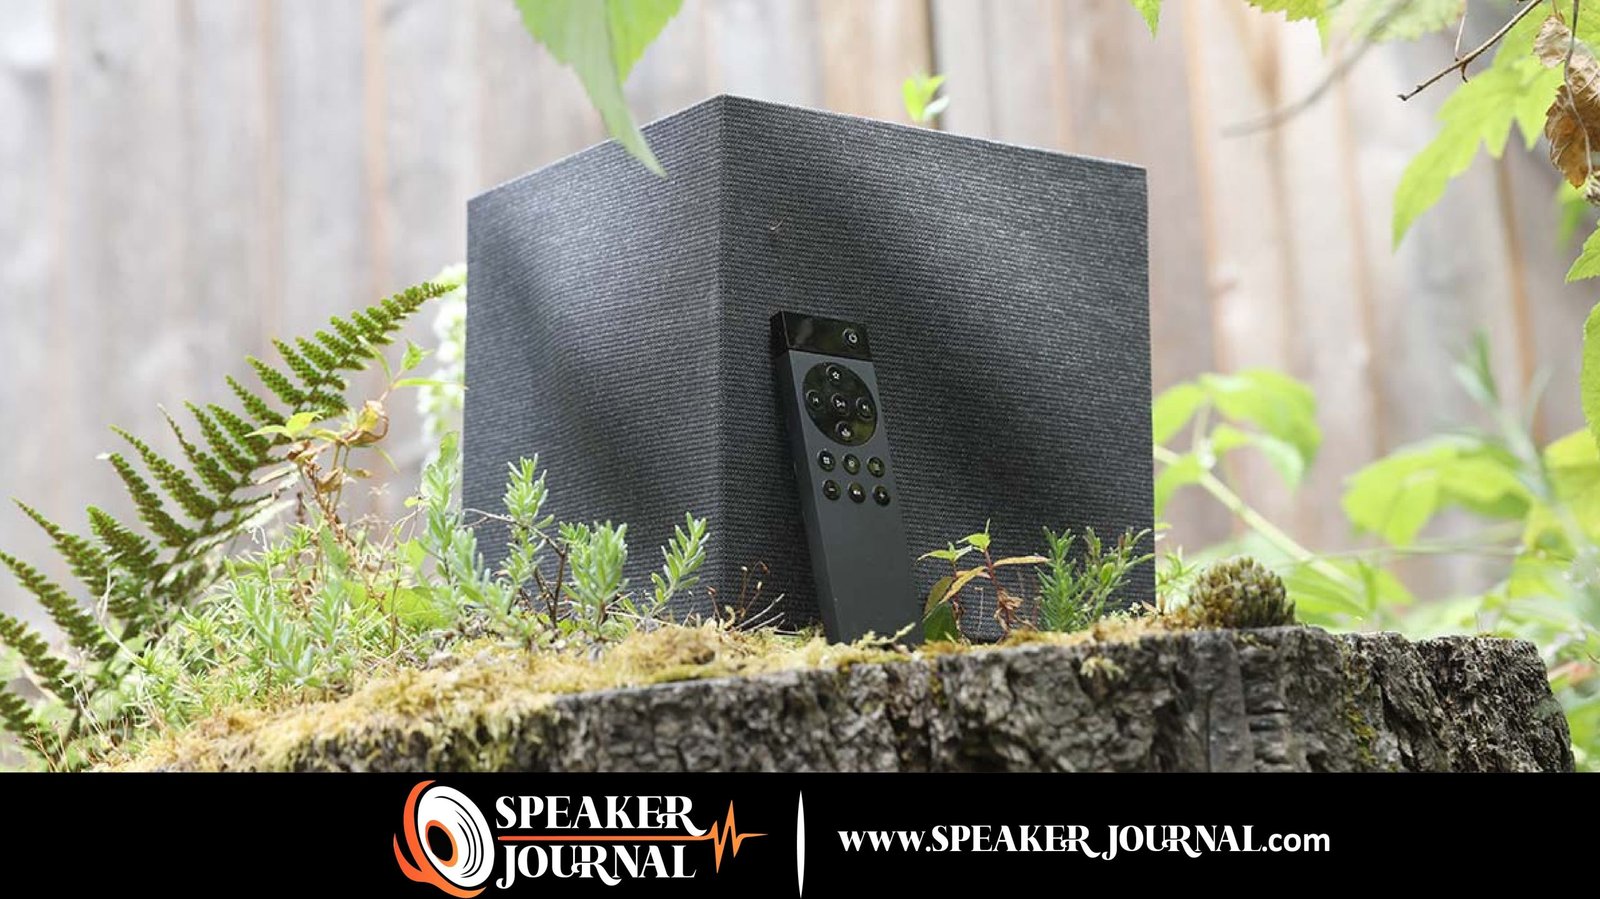 How Does A Wireless Speaker Work by speakerjournal.com